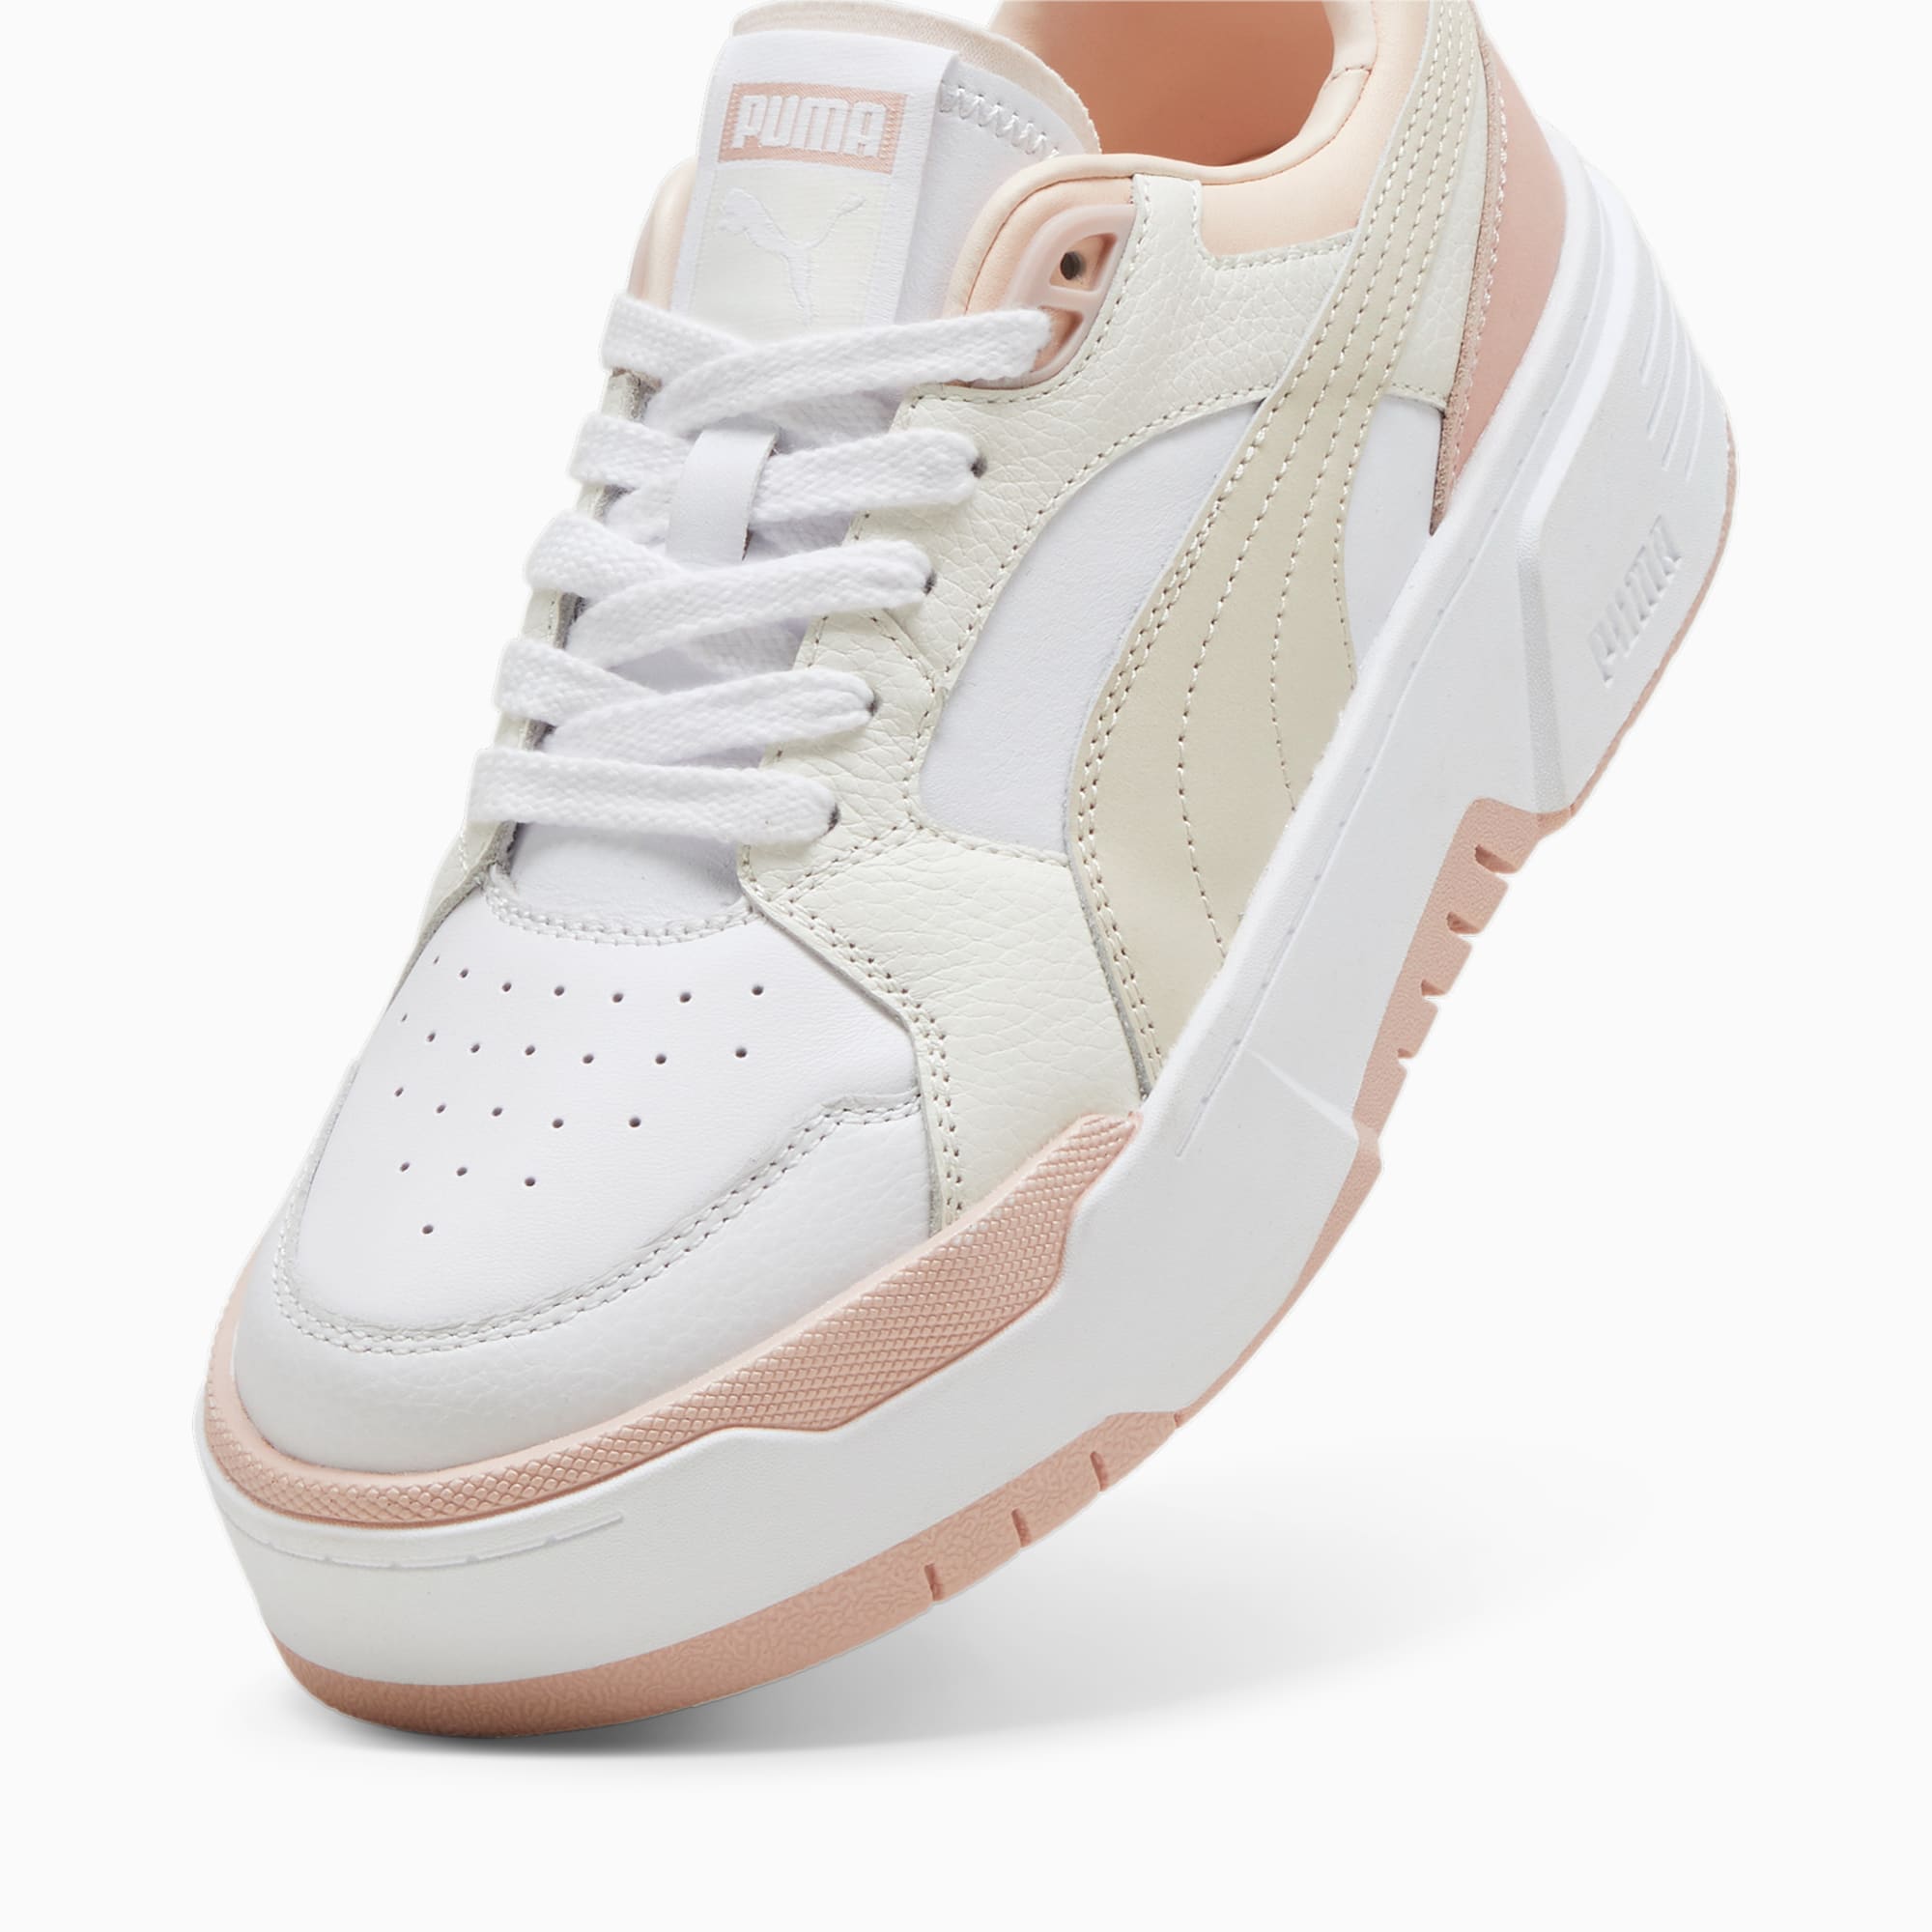 PUMA Chaussure Sneakers CA Flyz PRM Femme, Blanc/Rose